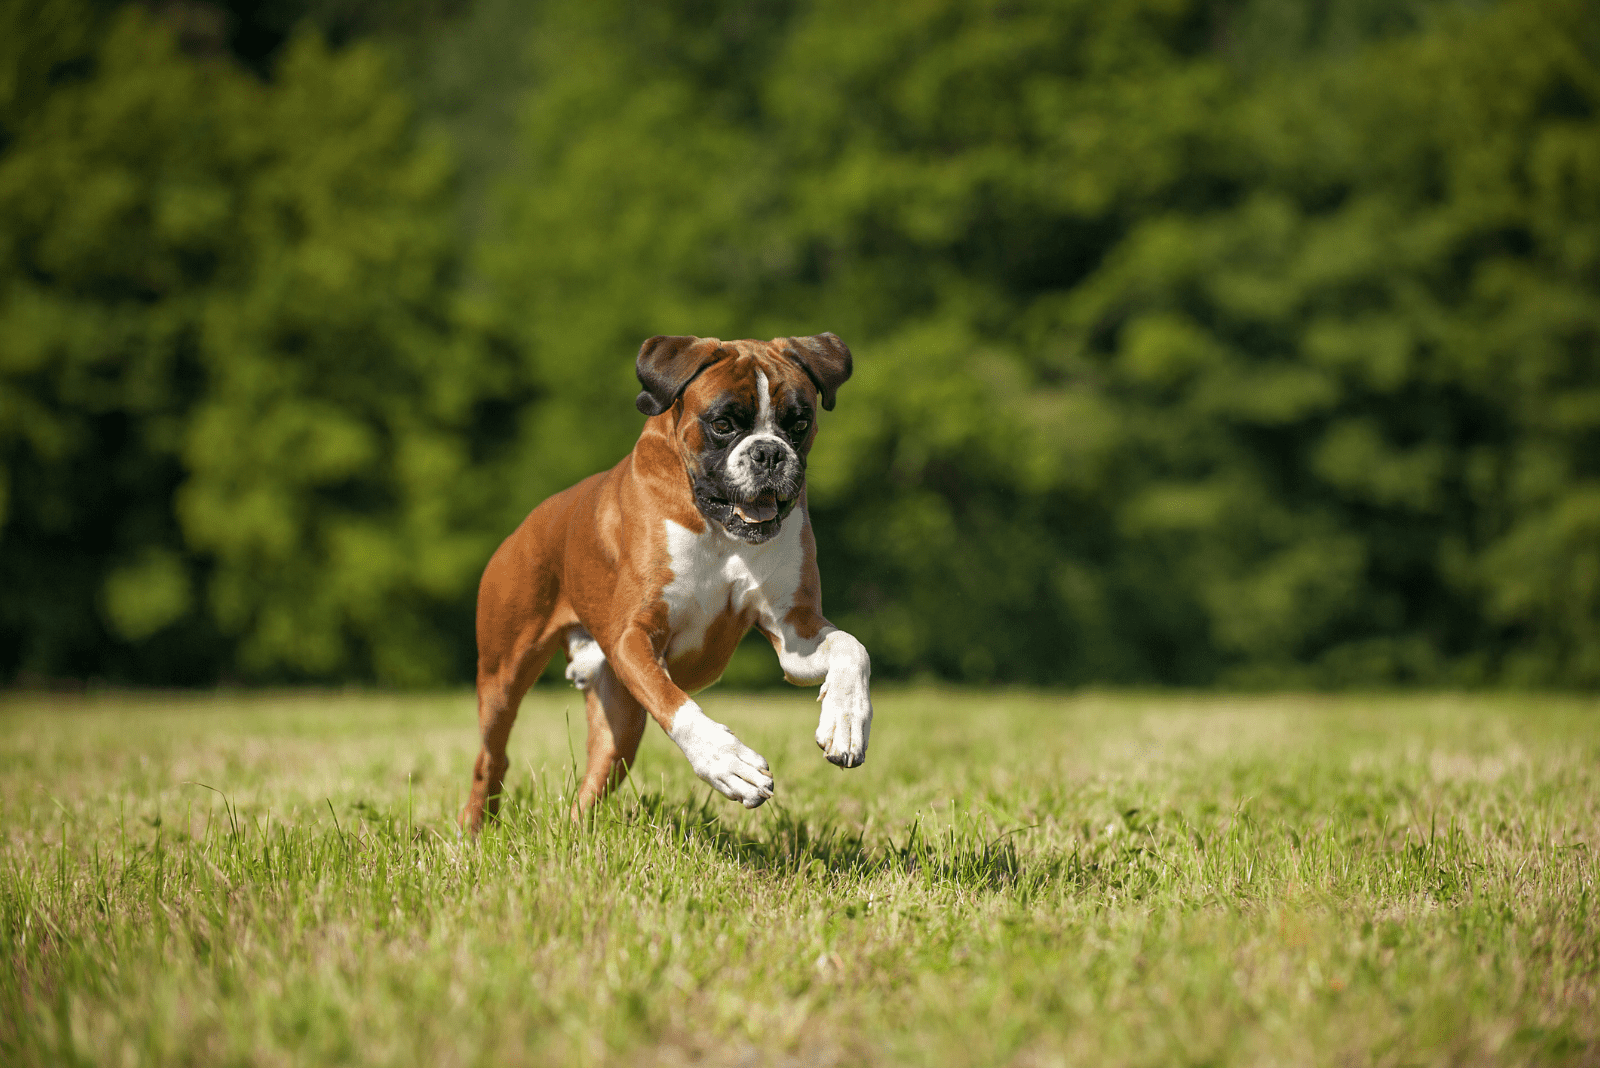 Boxer runs across the field